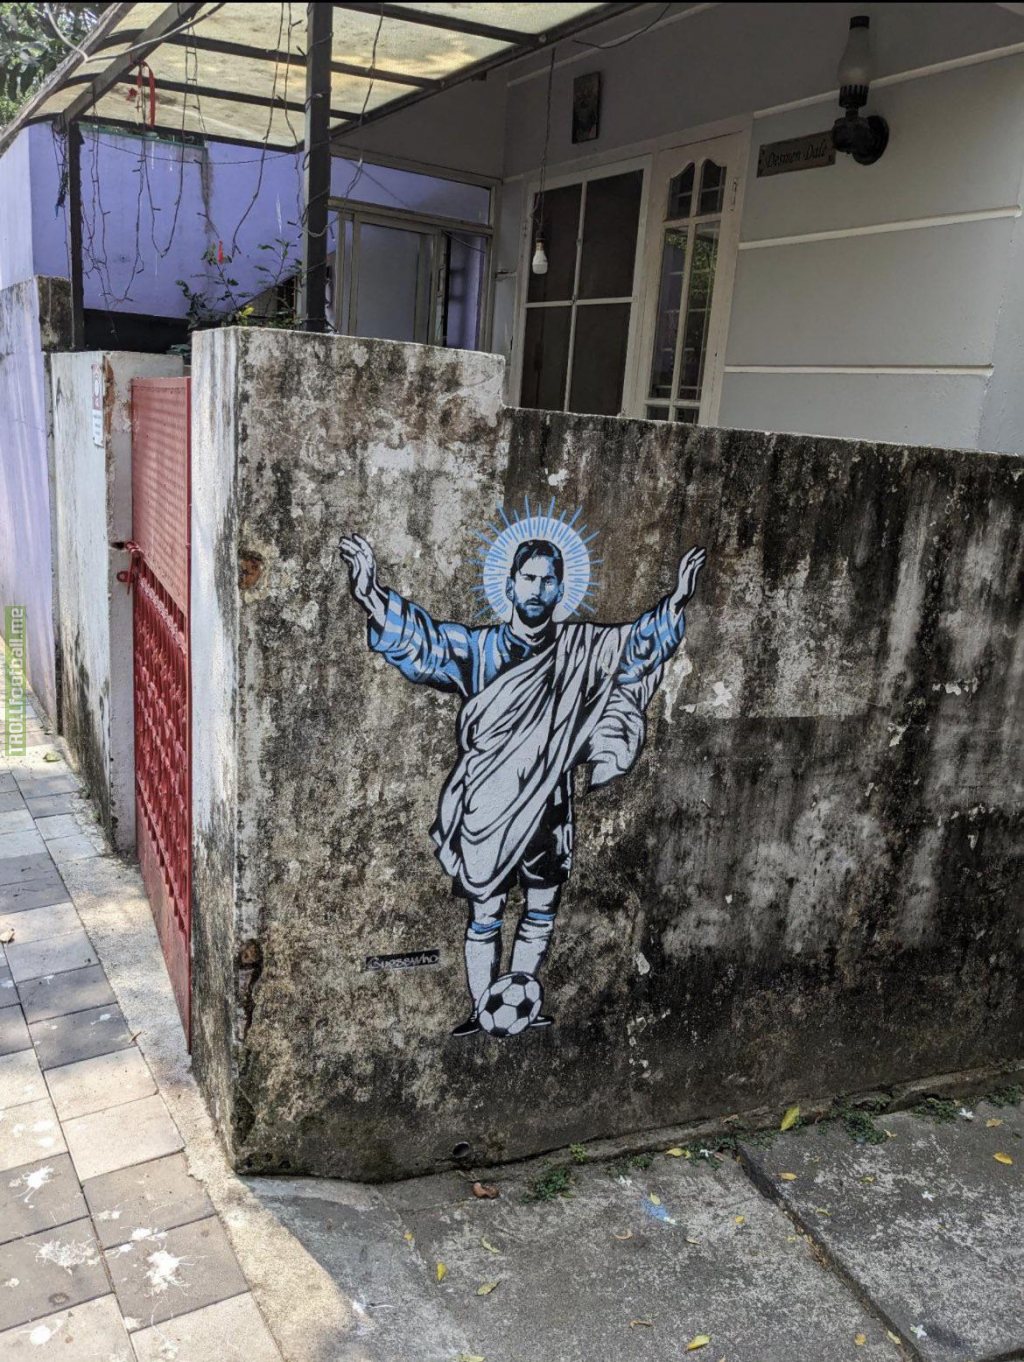 Leo Messi mural in Fort Kochi, India.